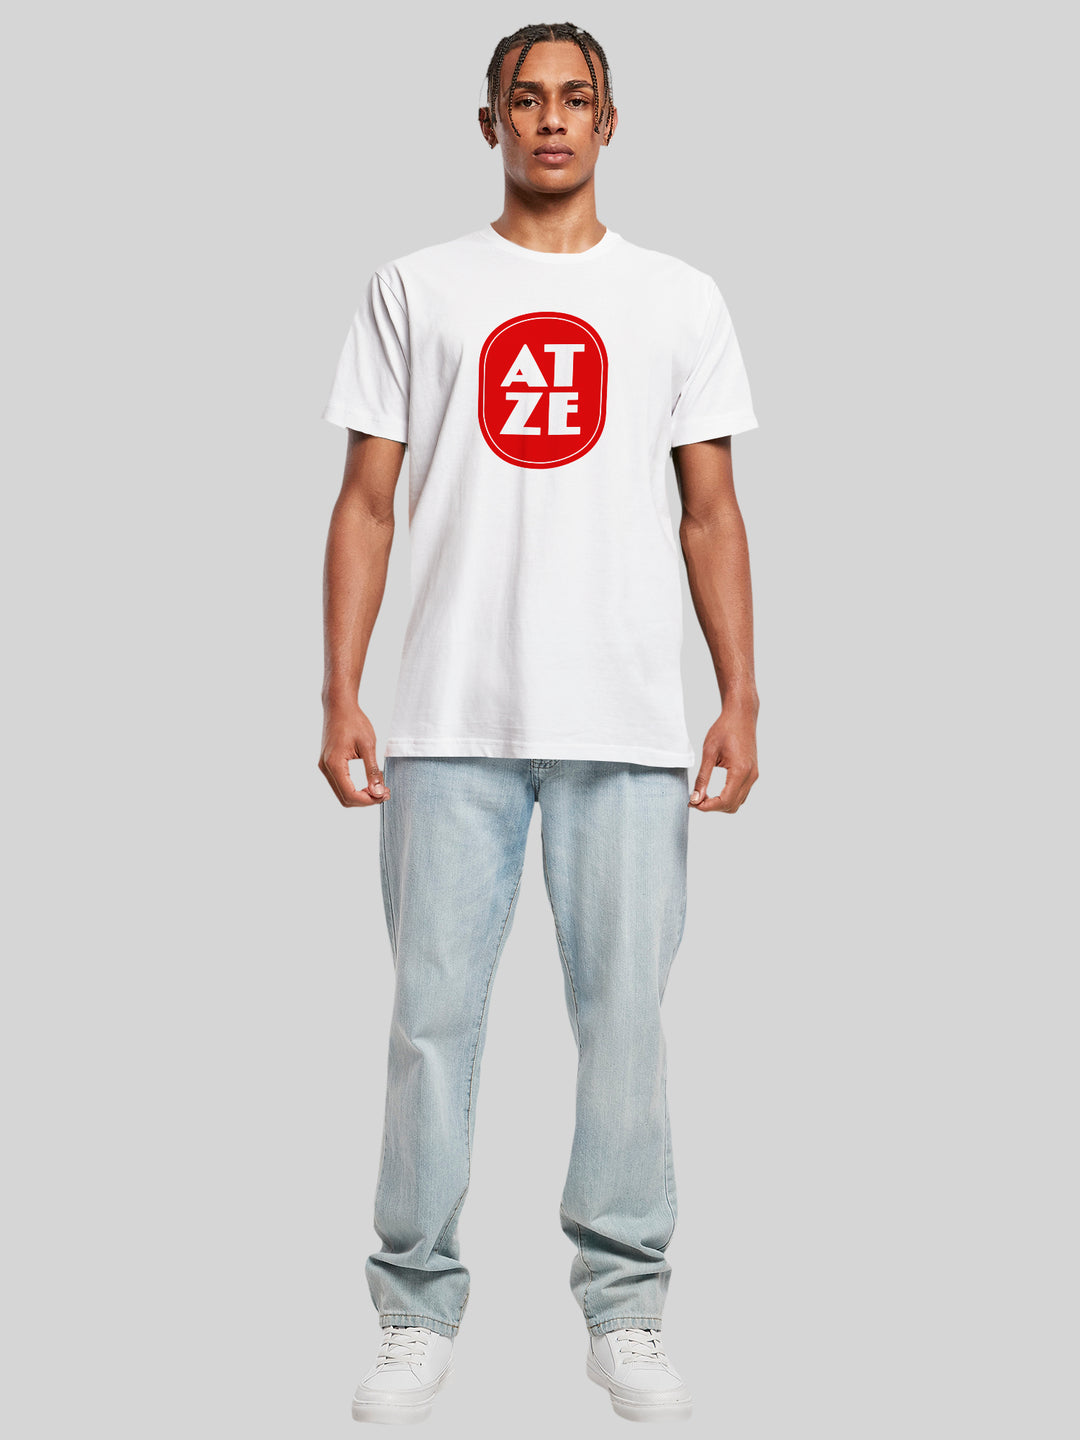 Logo Atze Logo with T-Shirt Round Neck